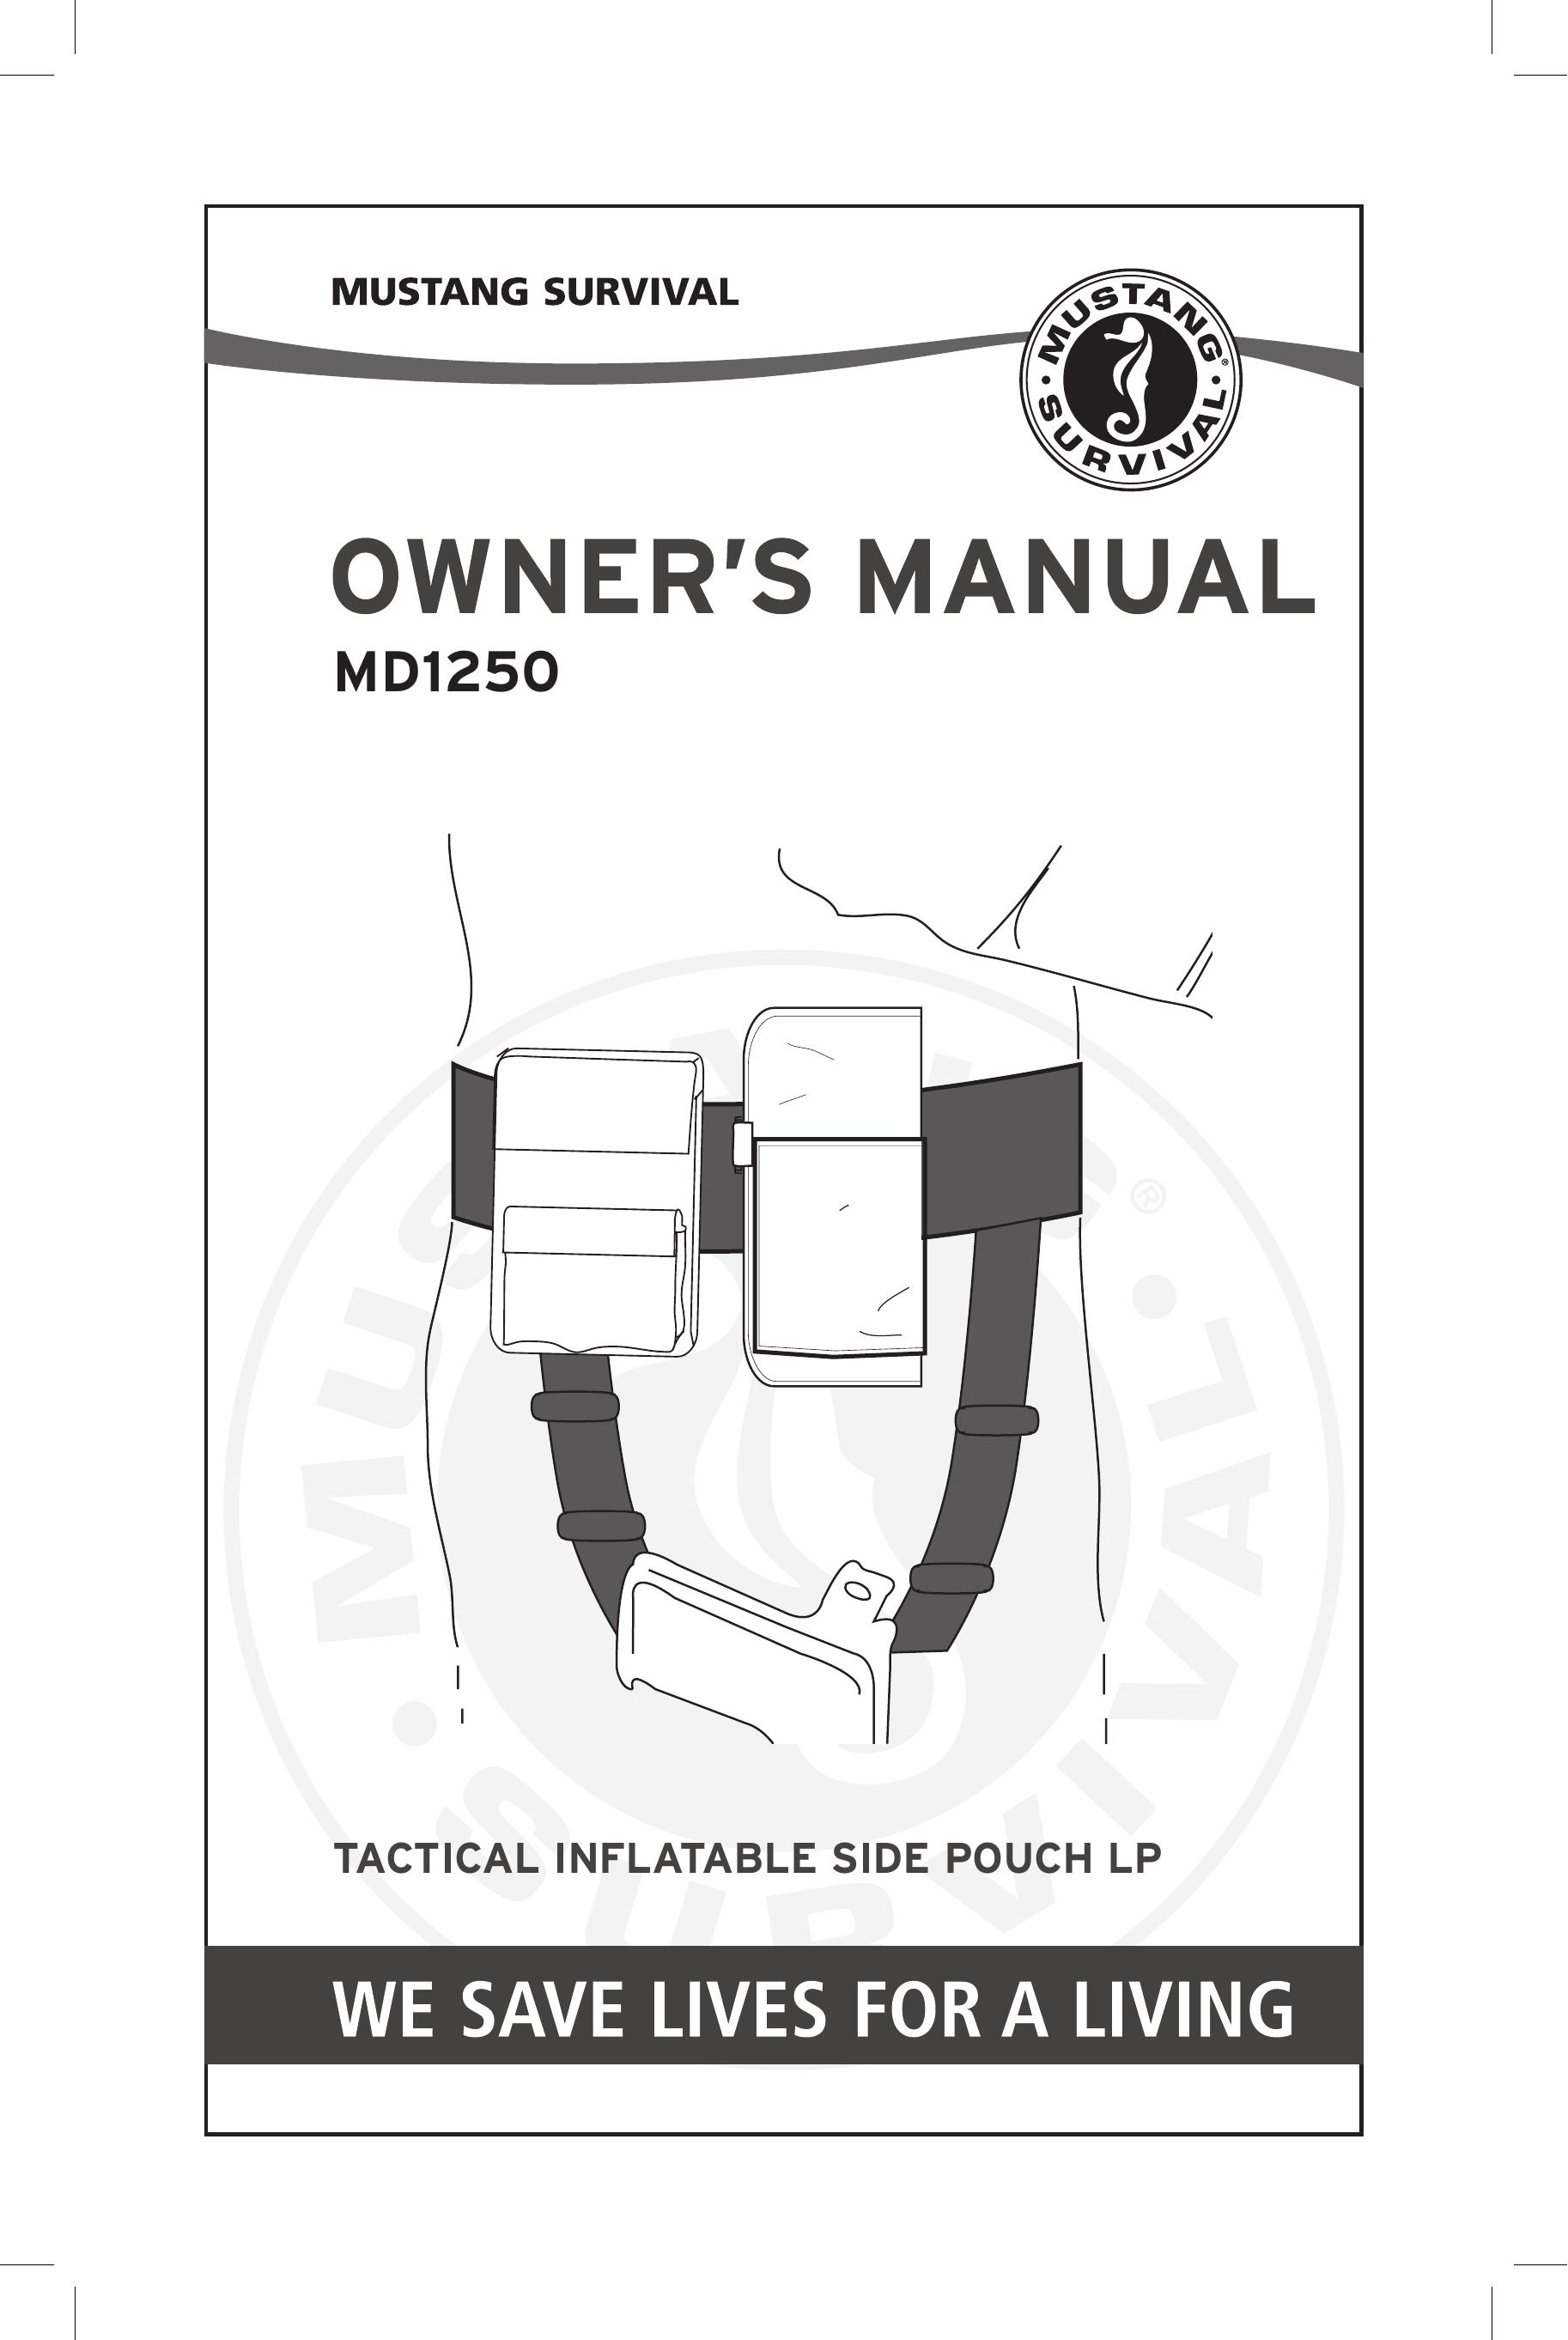 Mustang Survival MD1250 Life Jacket User Manual